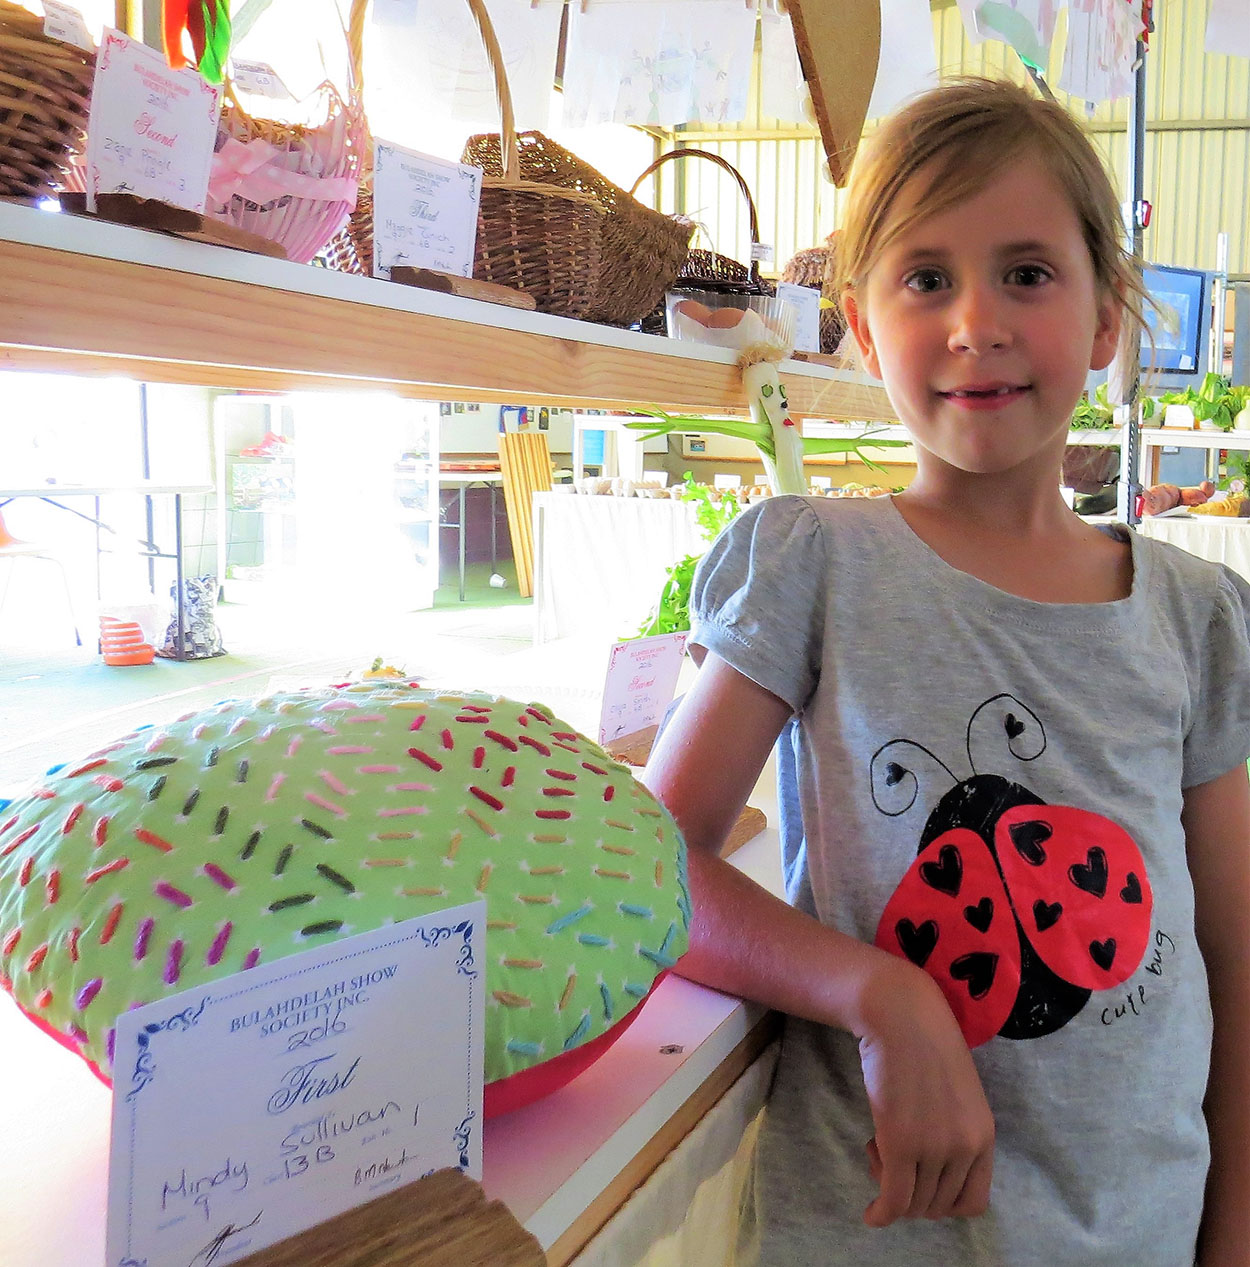 SEWING: Six-year old Mindy Sullivan with her award-winning needlecraft